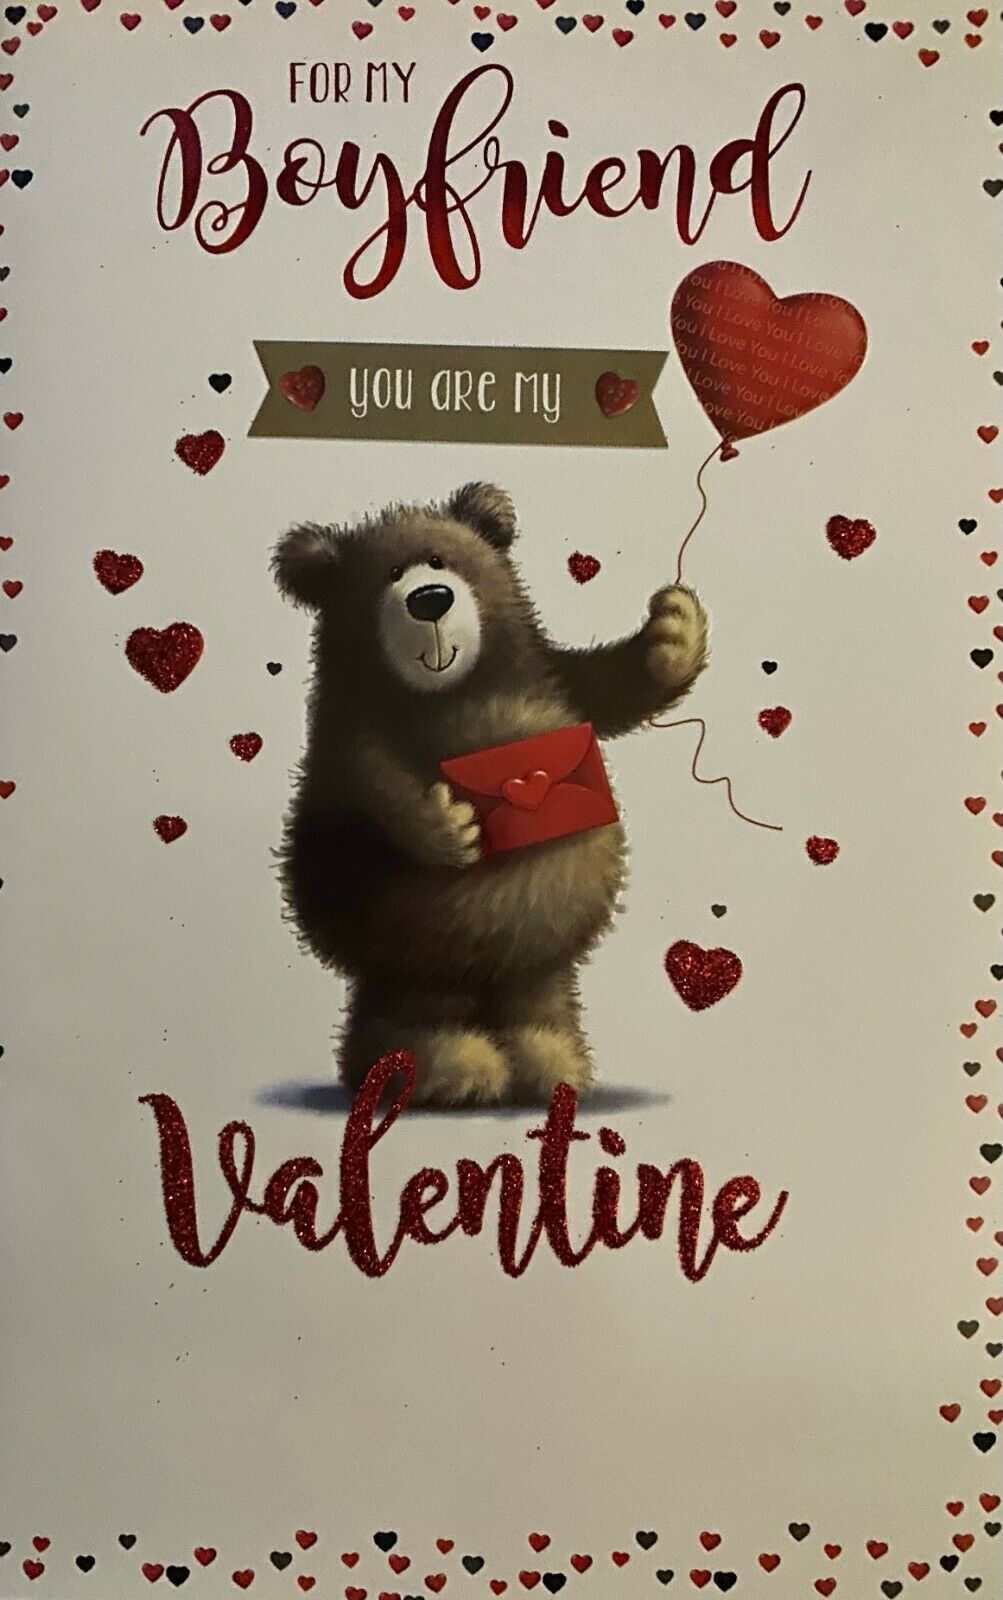 Valentine's Day Card For My Boyfriend - You Are My Valentine